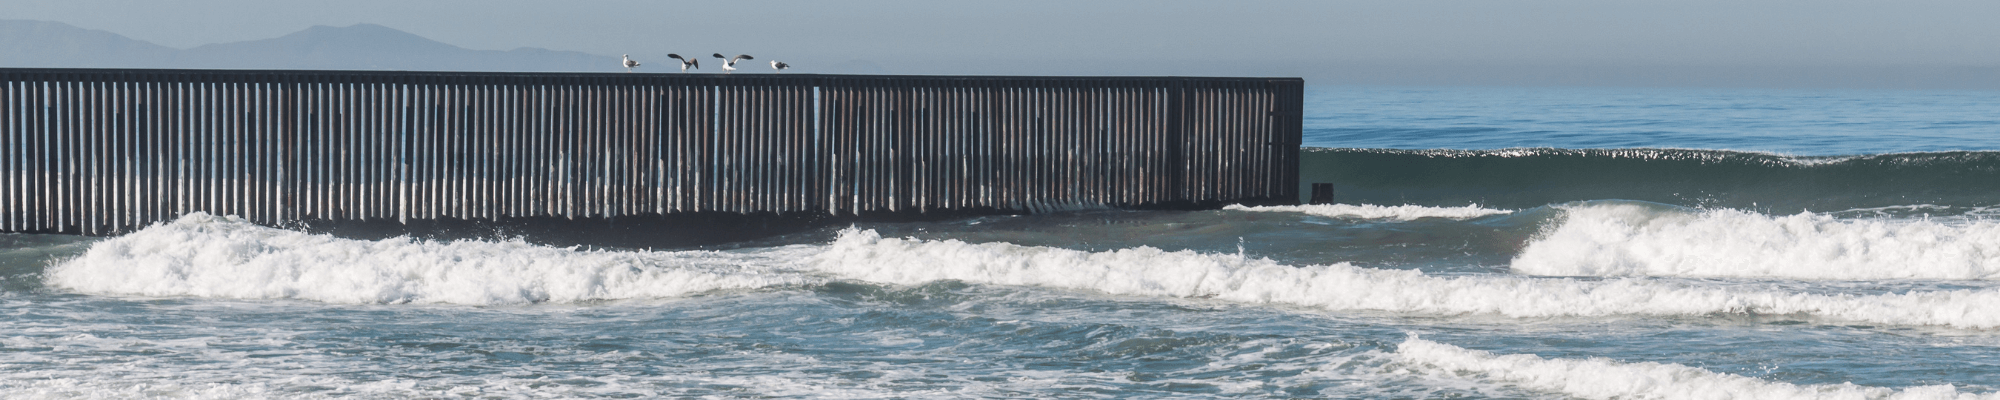 border fence in ocean between imperial beach and tijuana